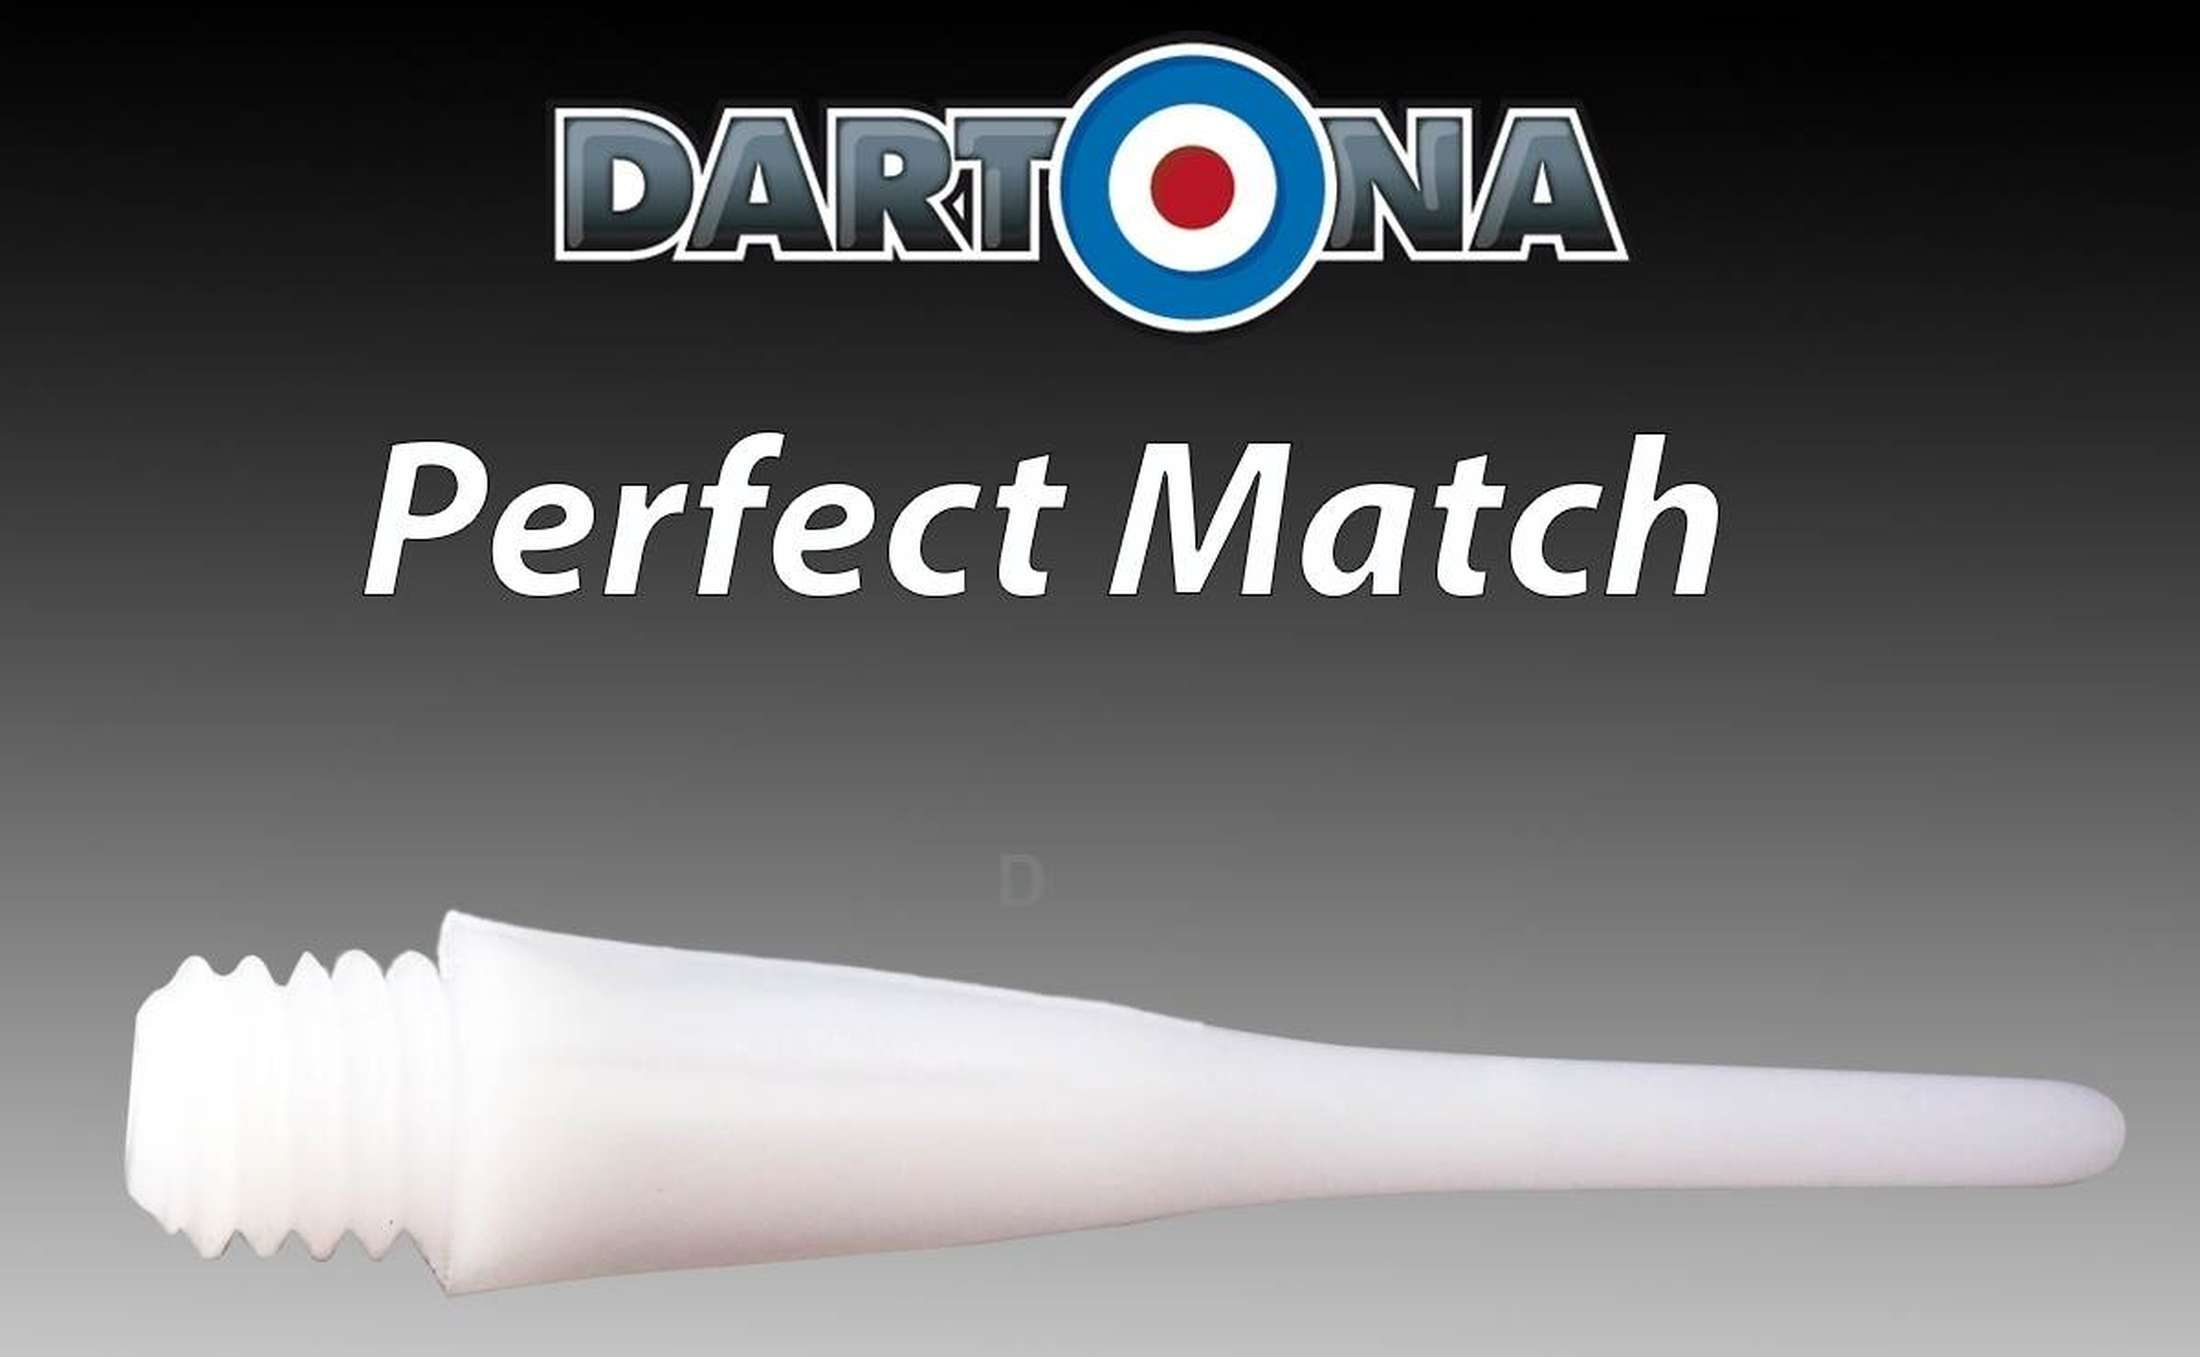 Dartpitzen Dartona Perfect Match 2BA, 250 Stück-1